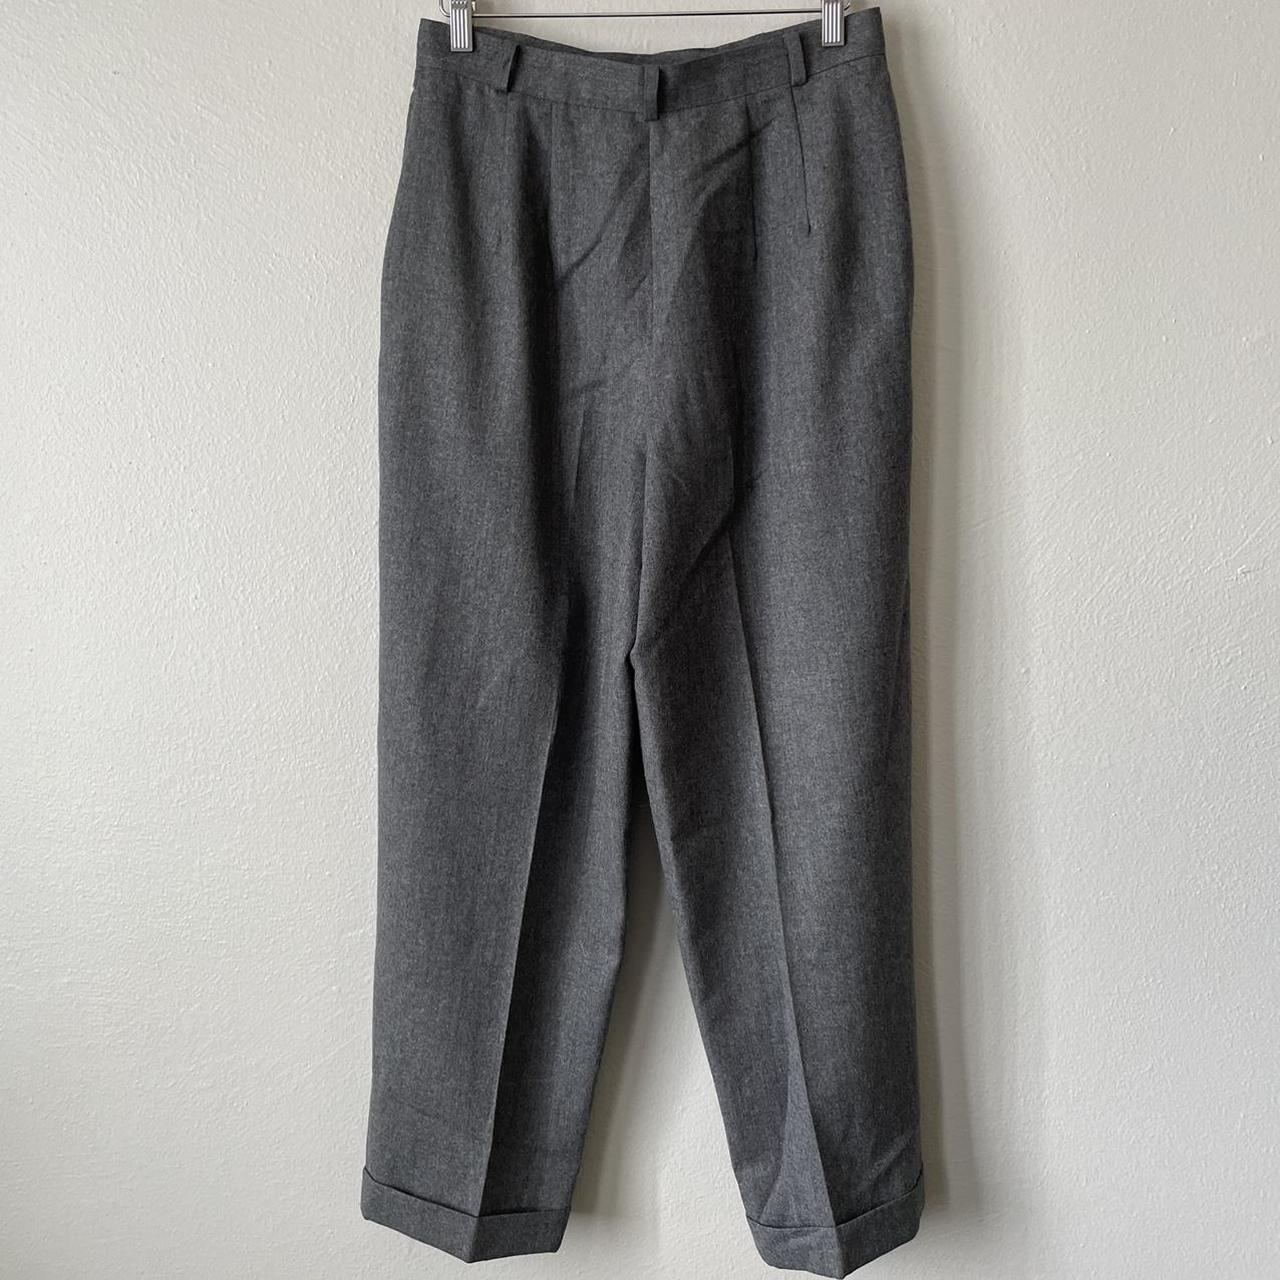 gray straight leg pleated wool trousers 🐰🐃 let us... - Depop